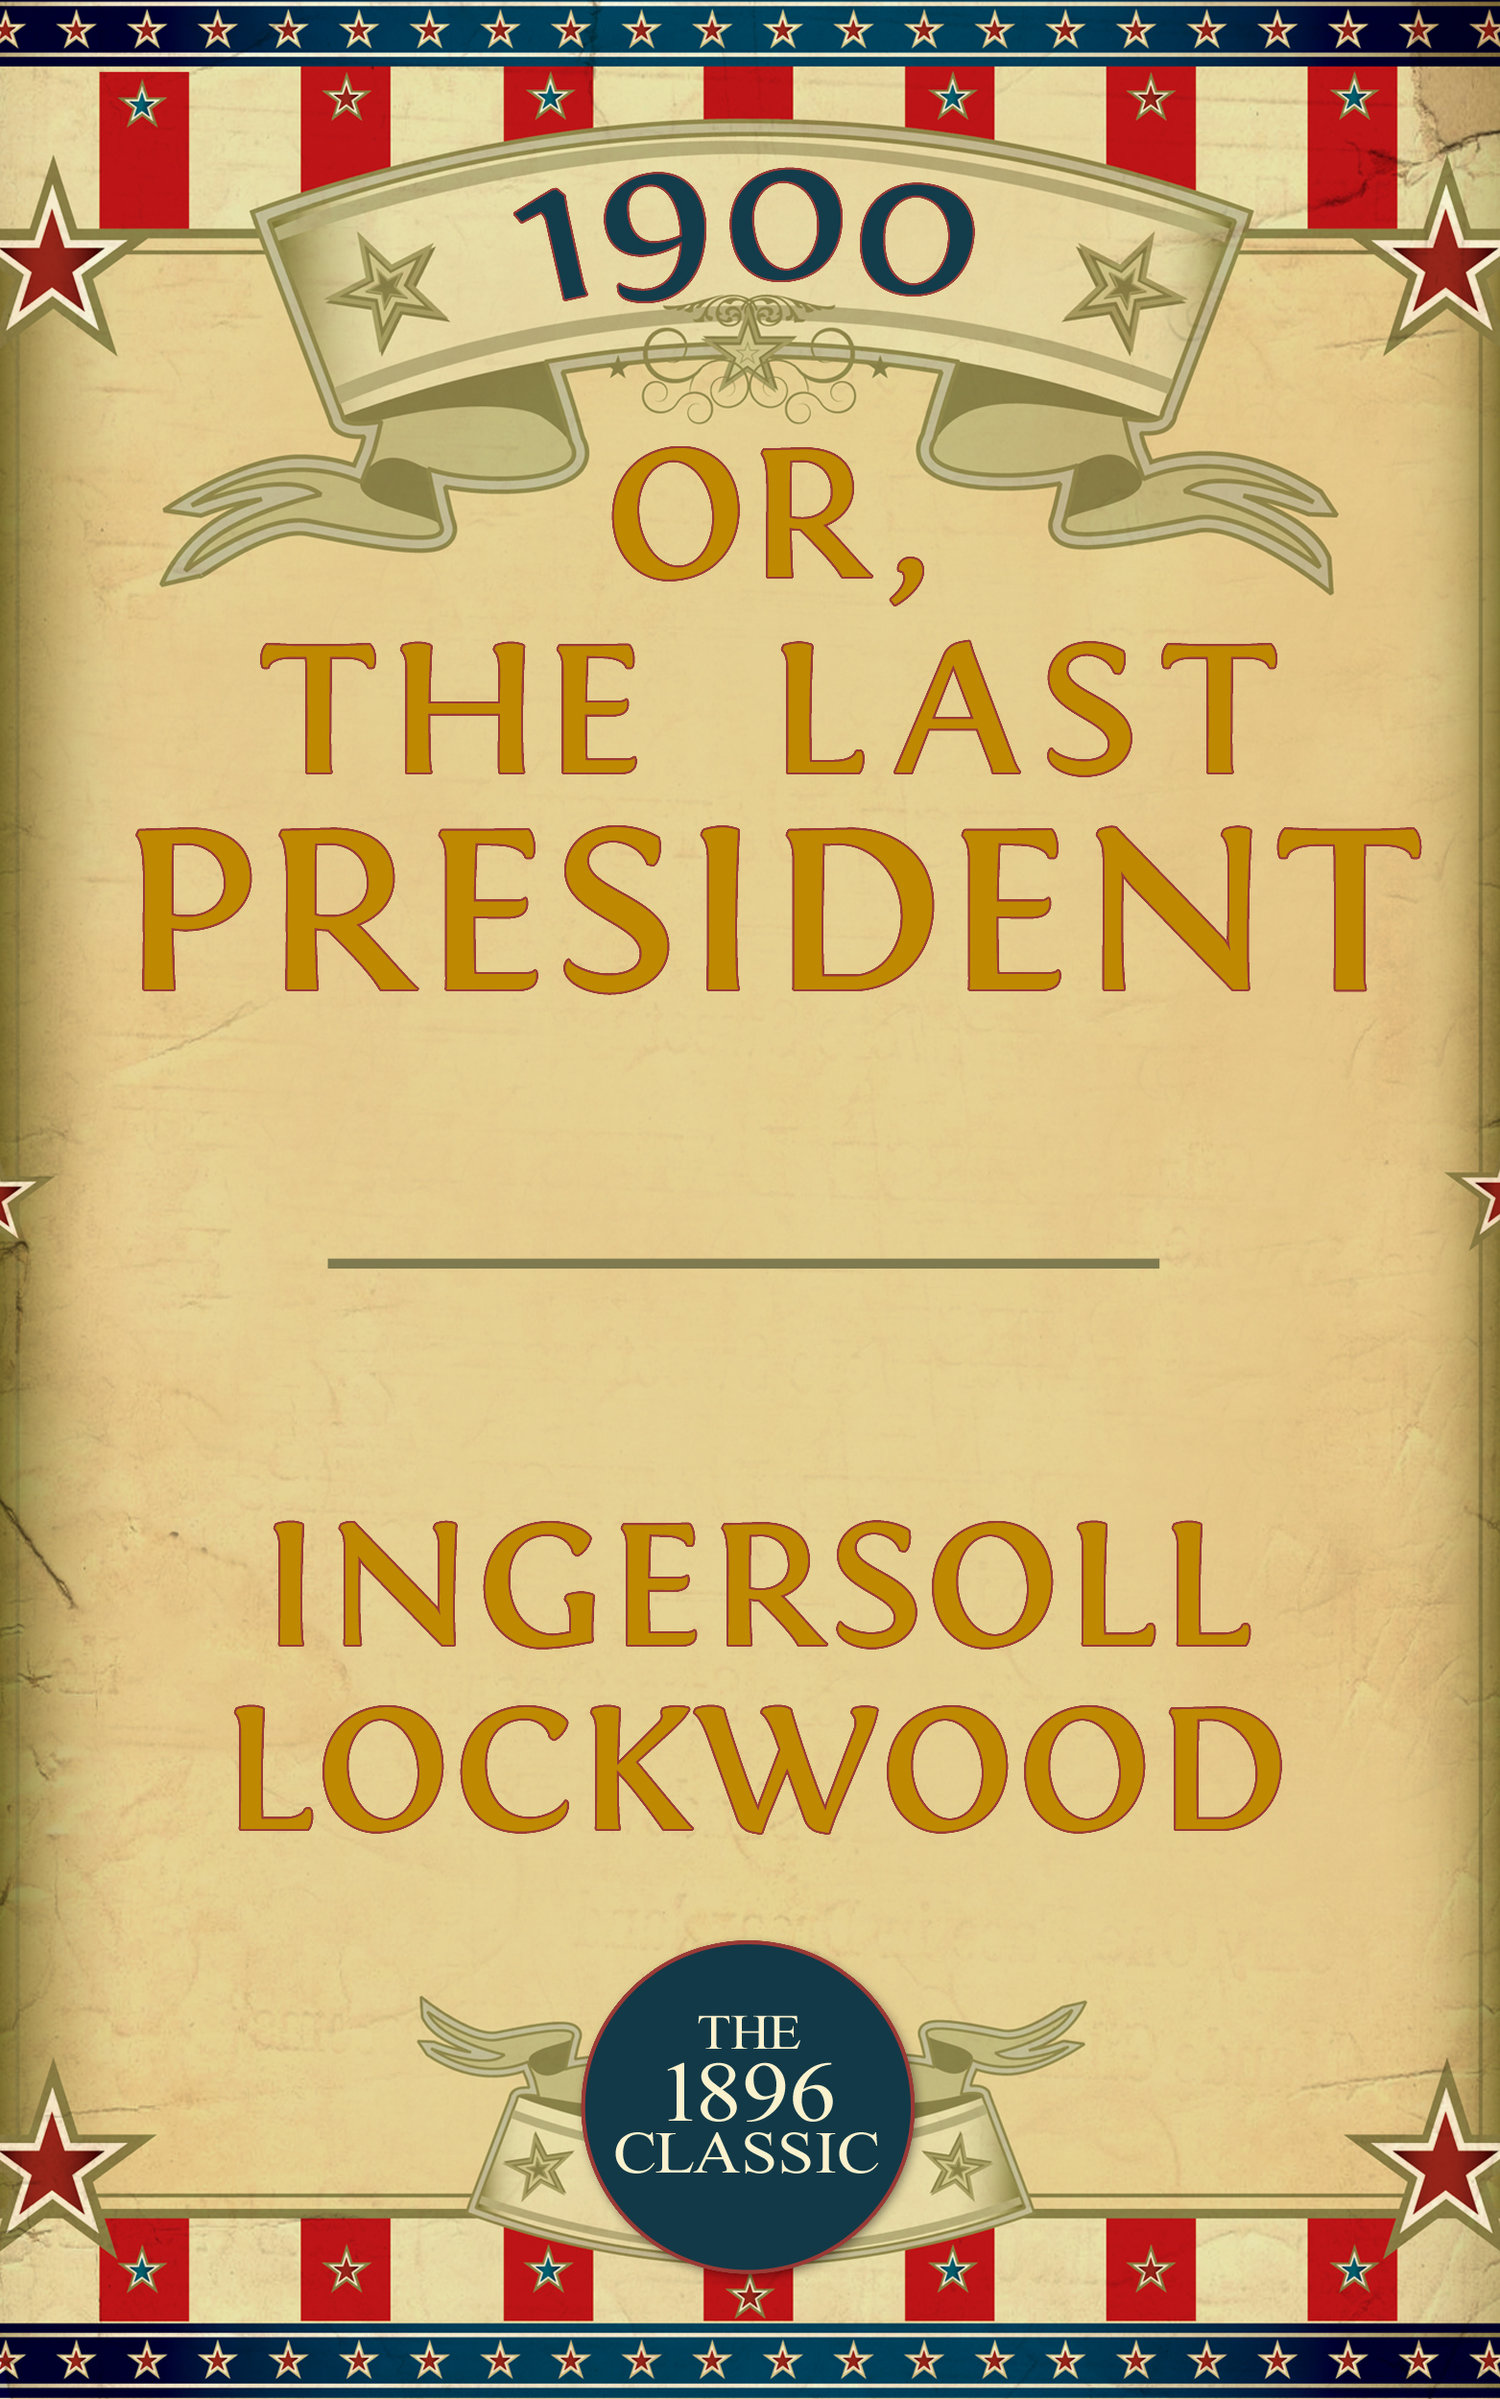 The book in 1900. Ингерсолл Локвуд. The last President.